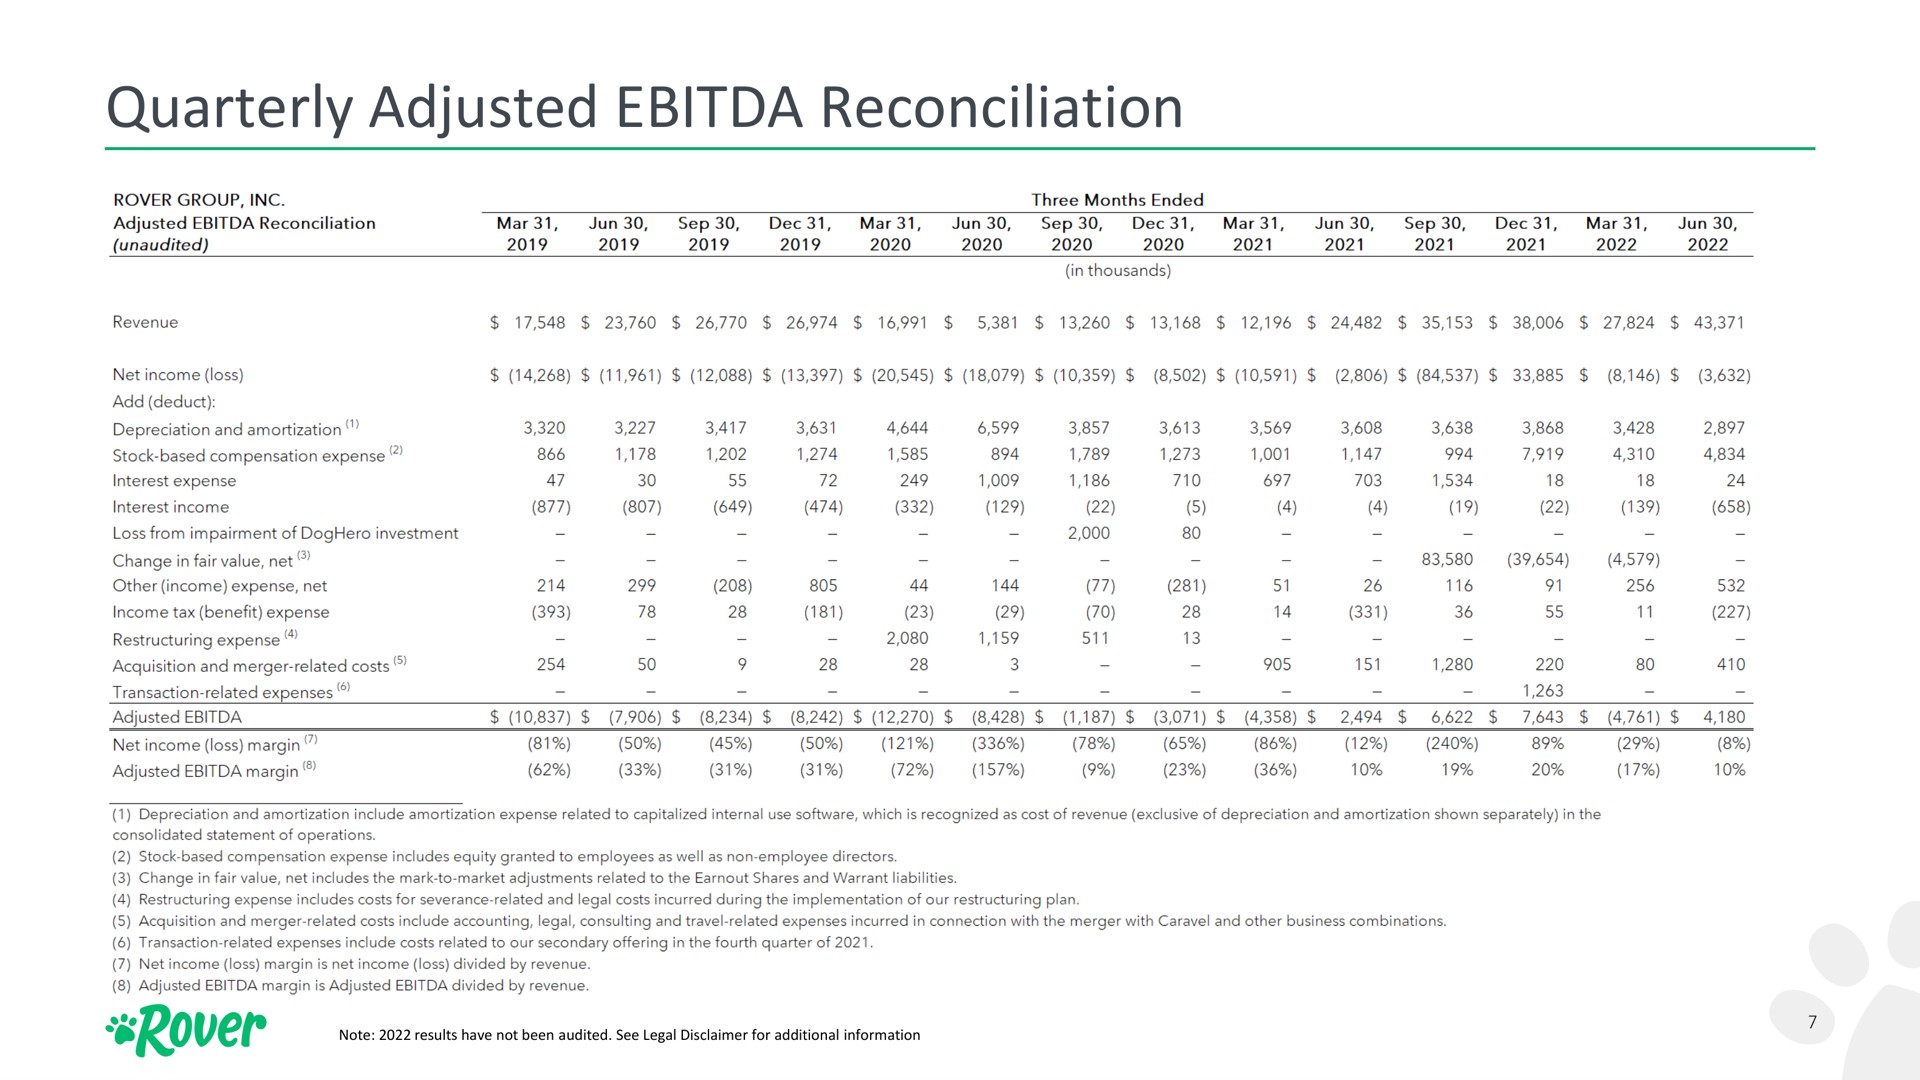 quarterly adjusted reconciliation net income loss margin | Rover